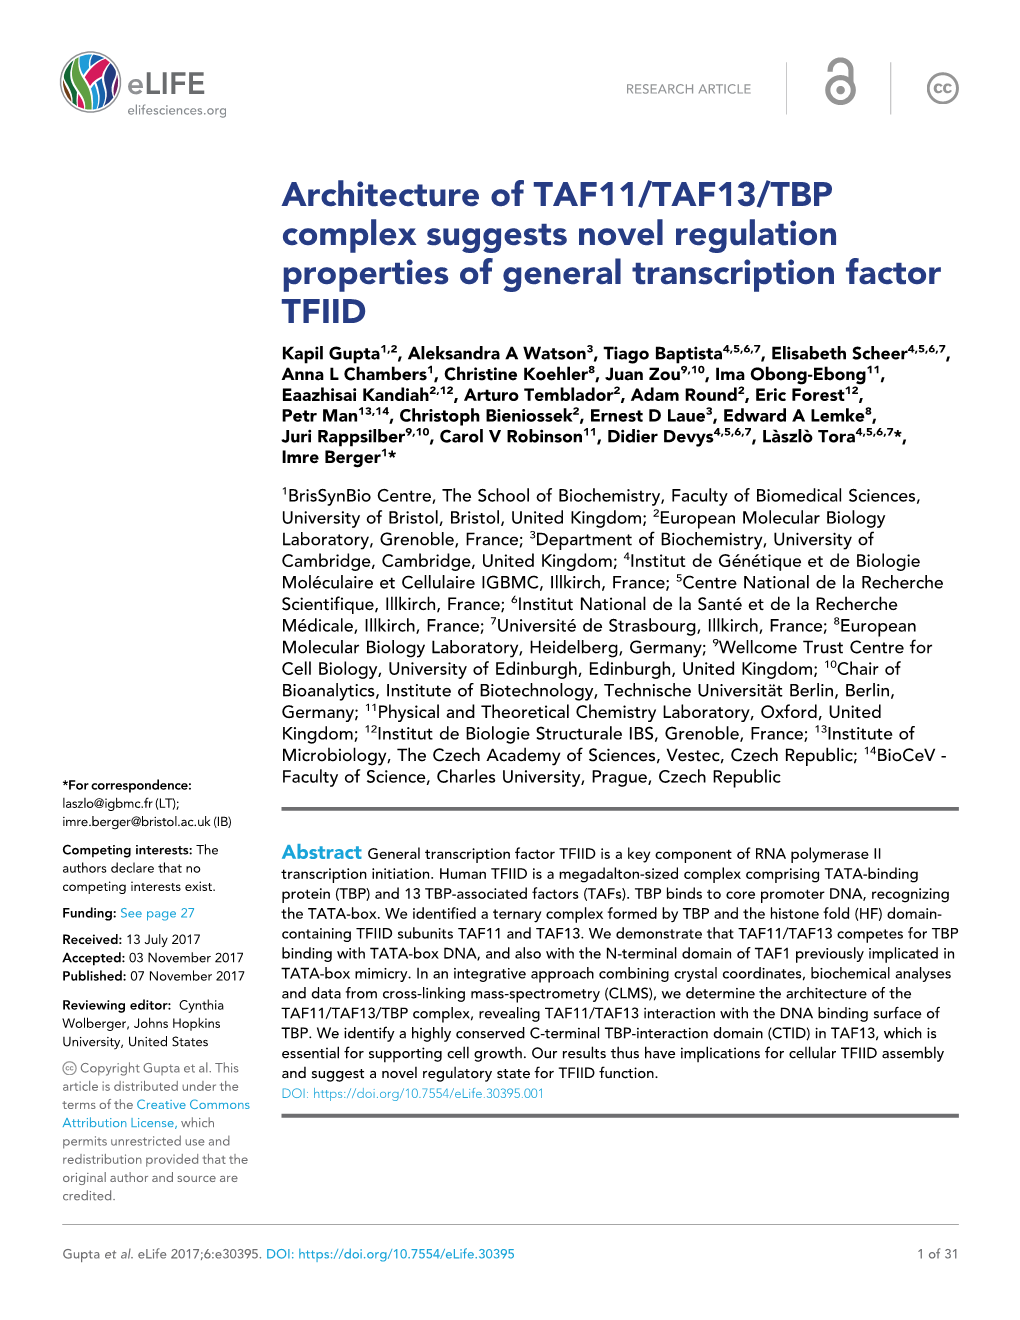 Architecture of TAF11/TAF13/TBP Complex Suggests Novel Regulation